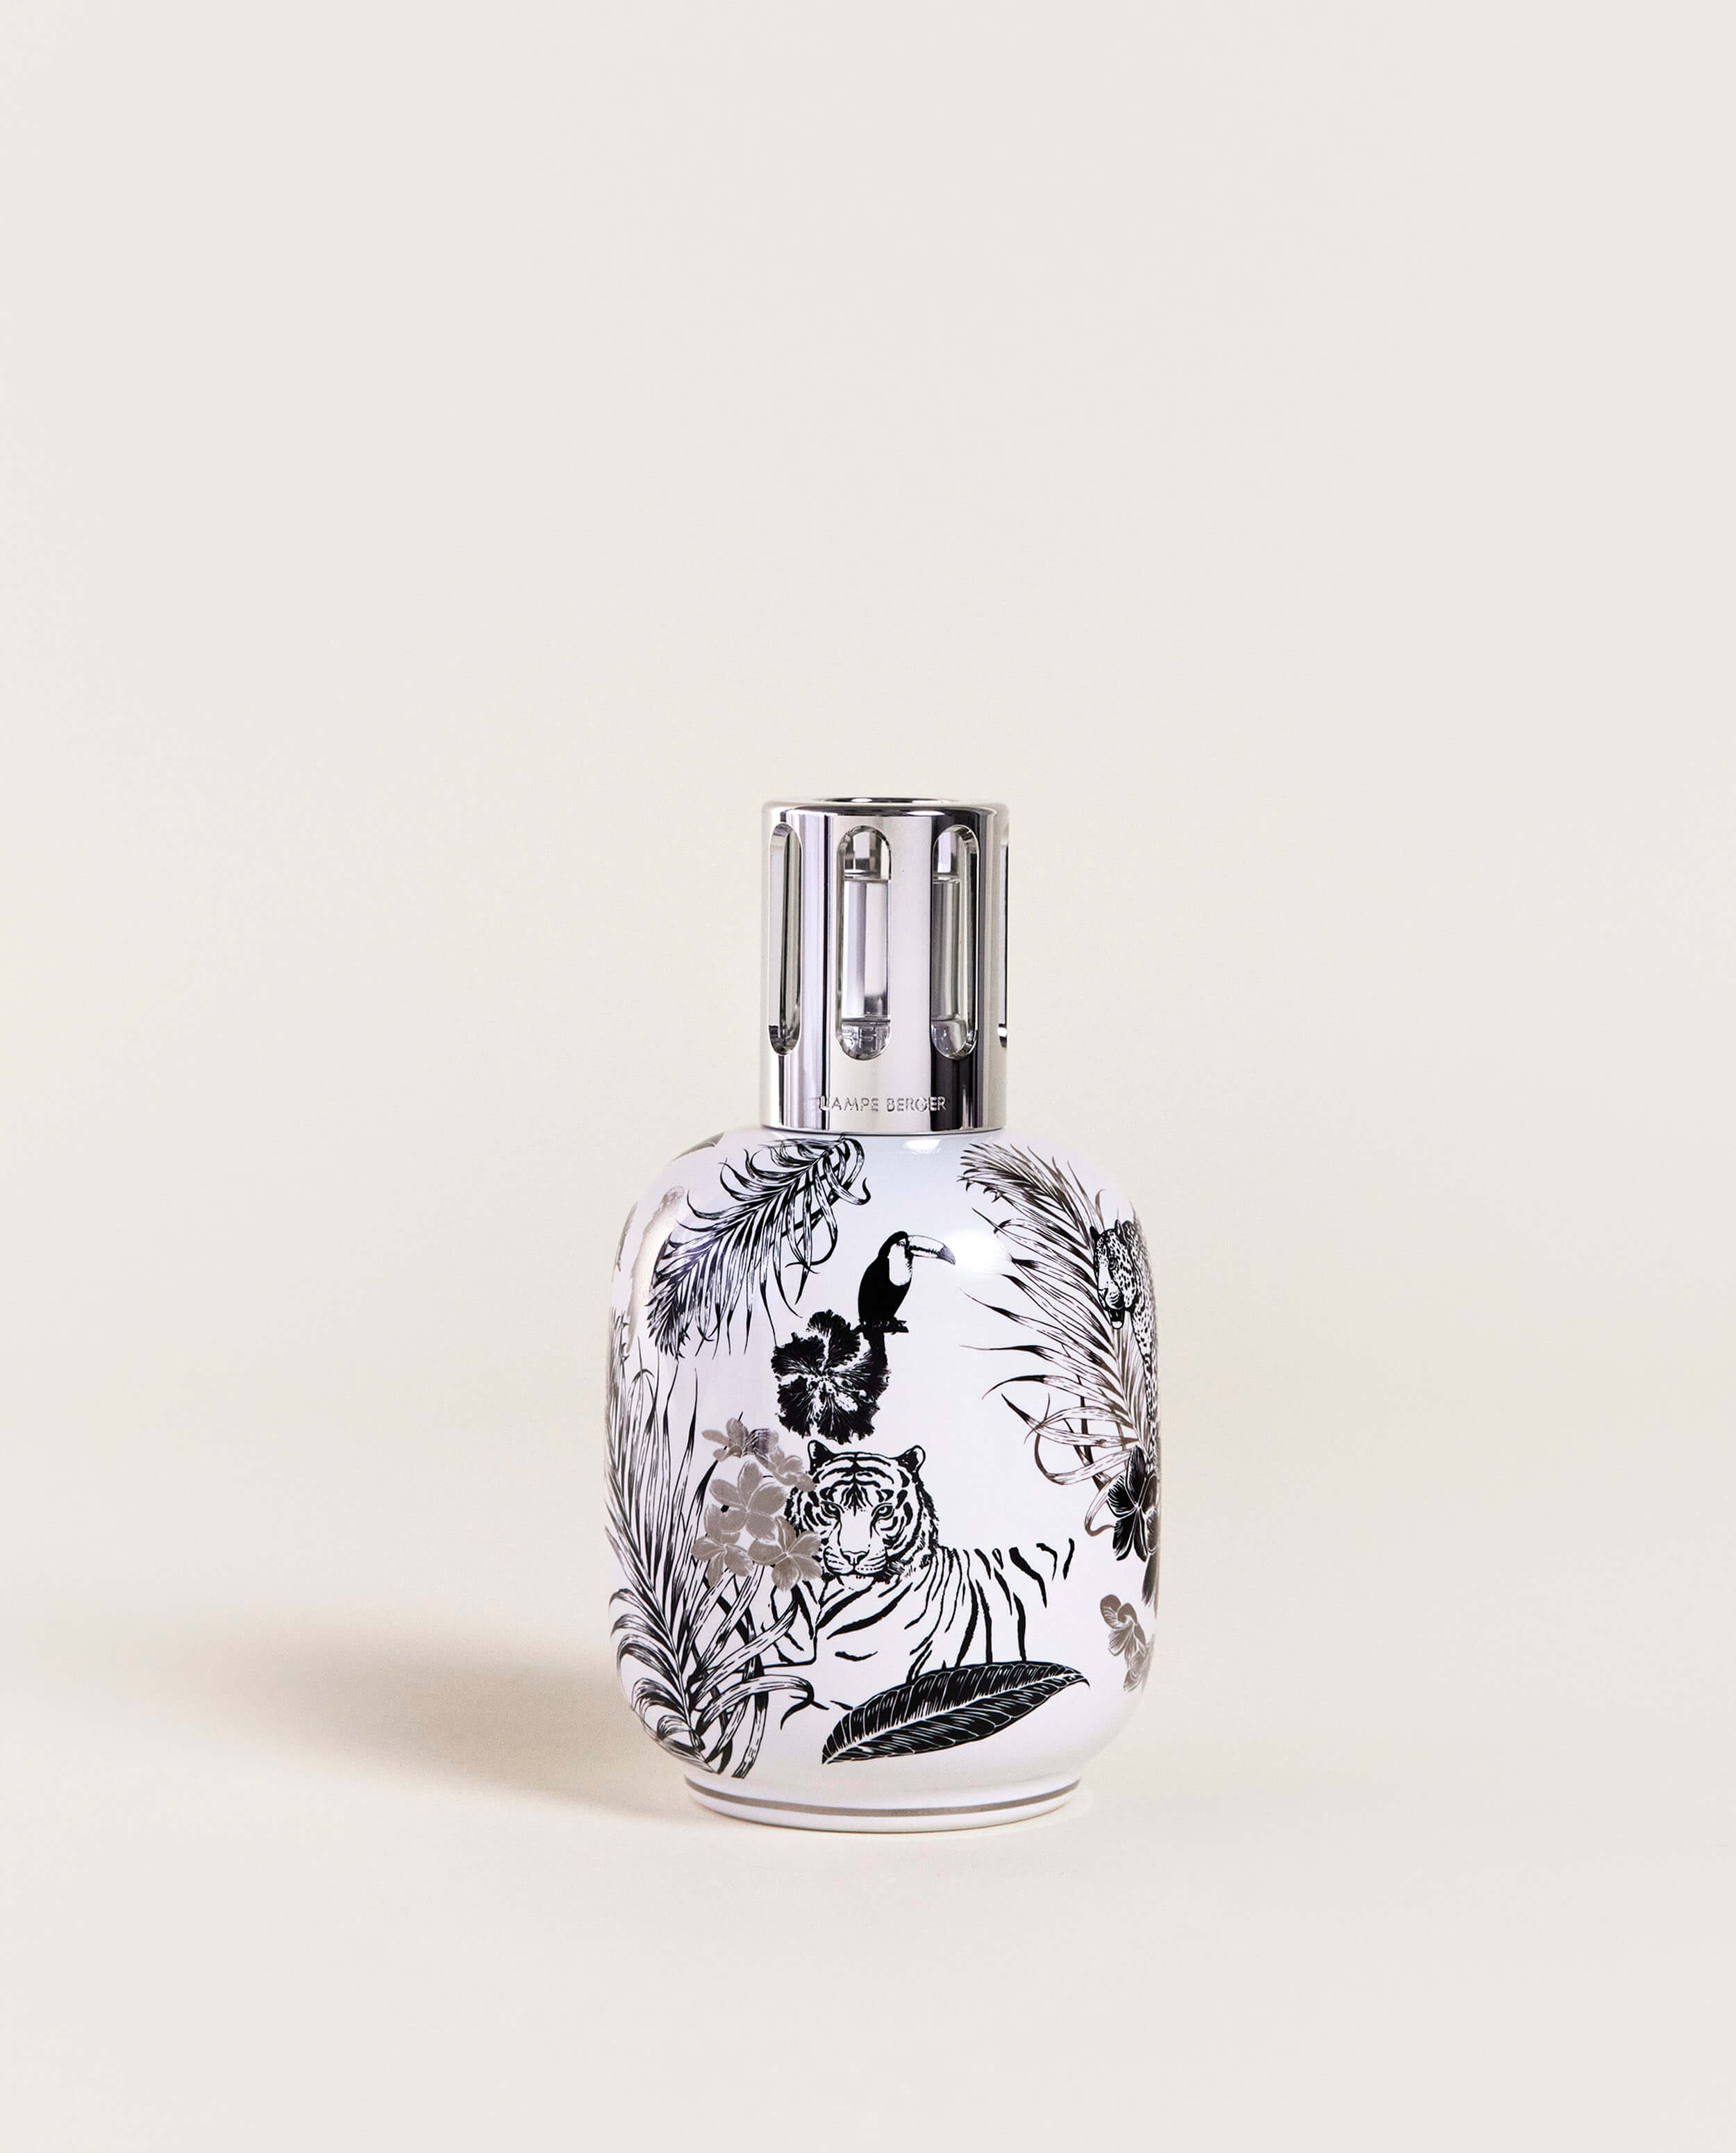 Evanescence Glass Lampe Berger Gift Set - Grey – Fragrance Oils Direct